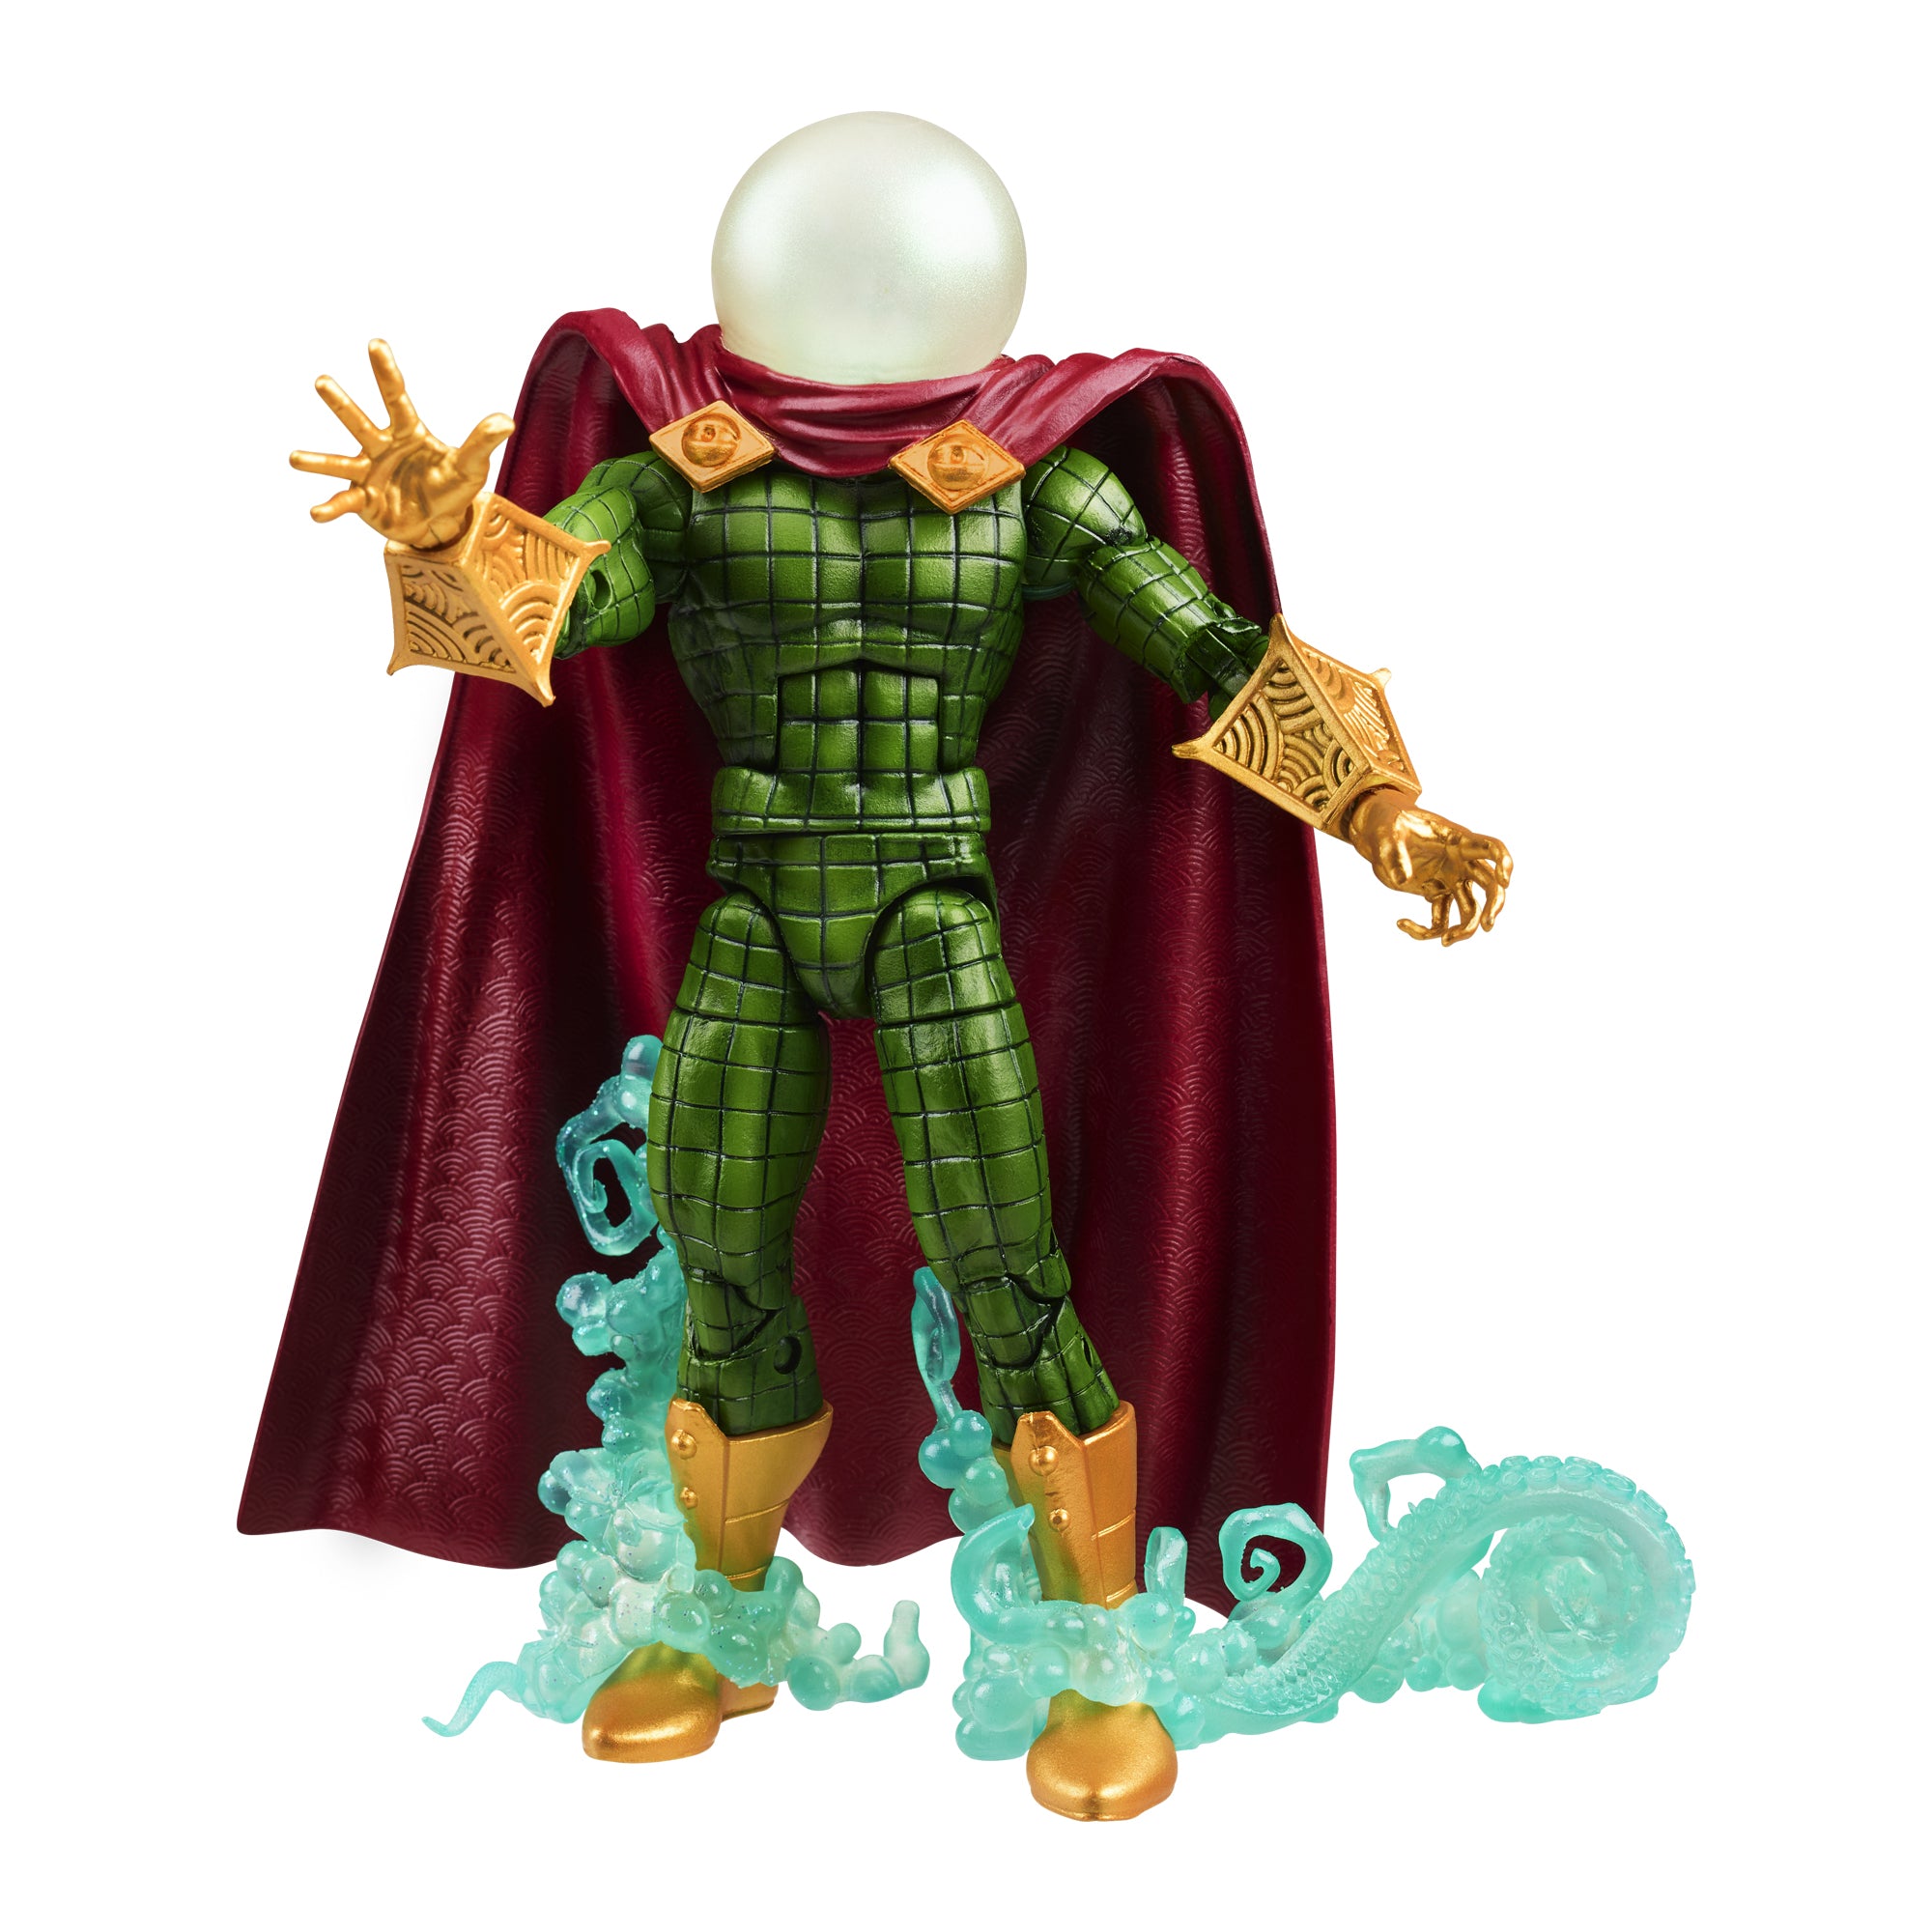 marvel legends mysterio figure